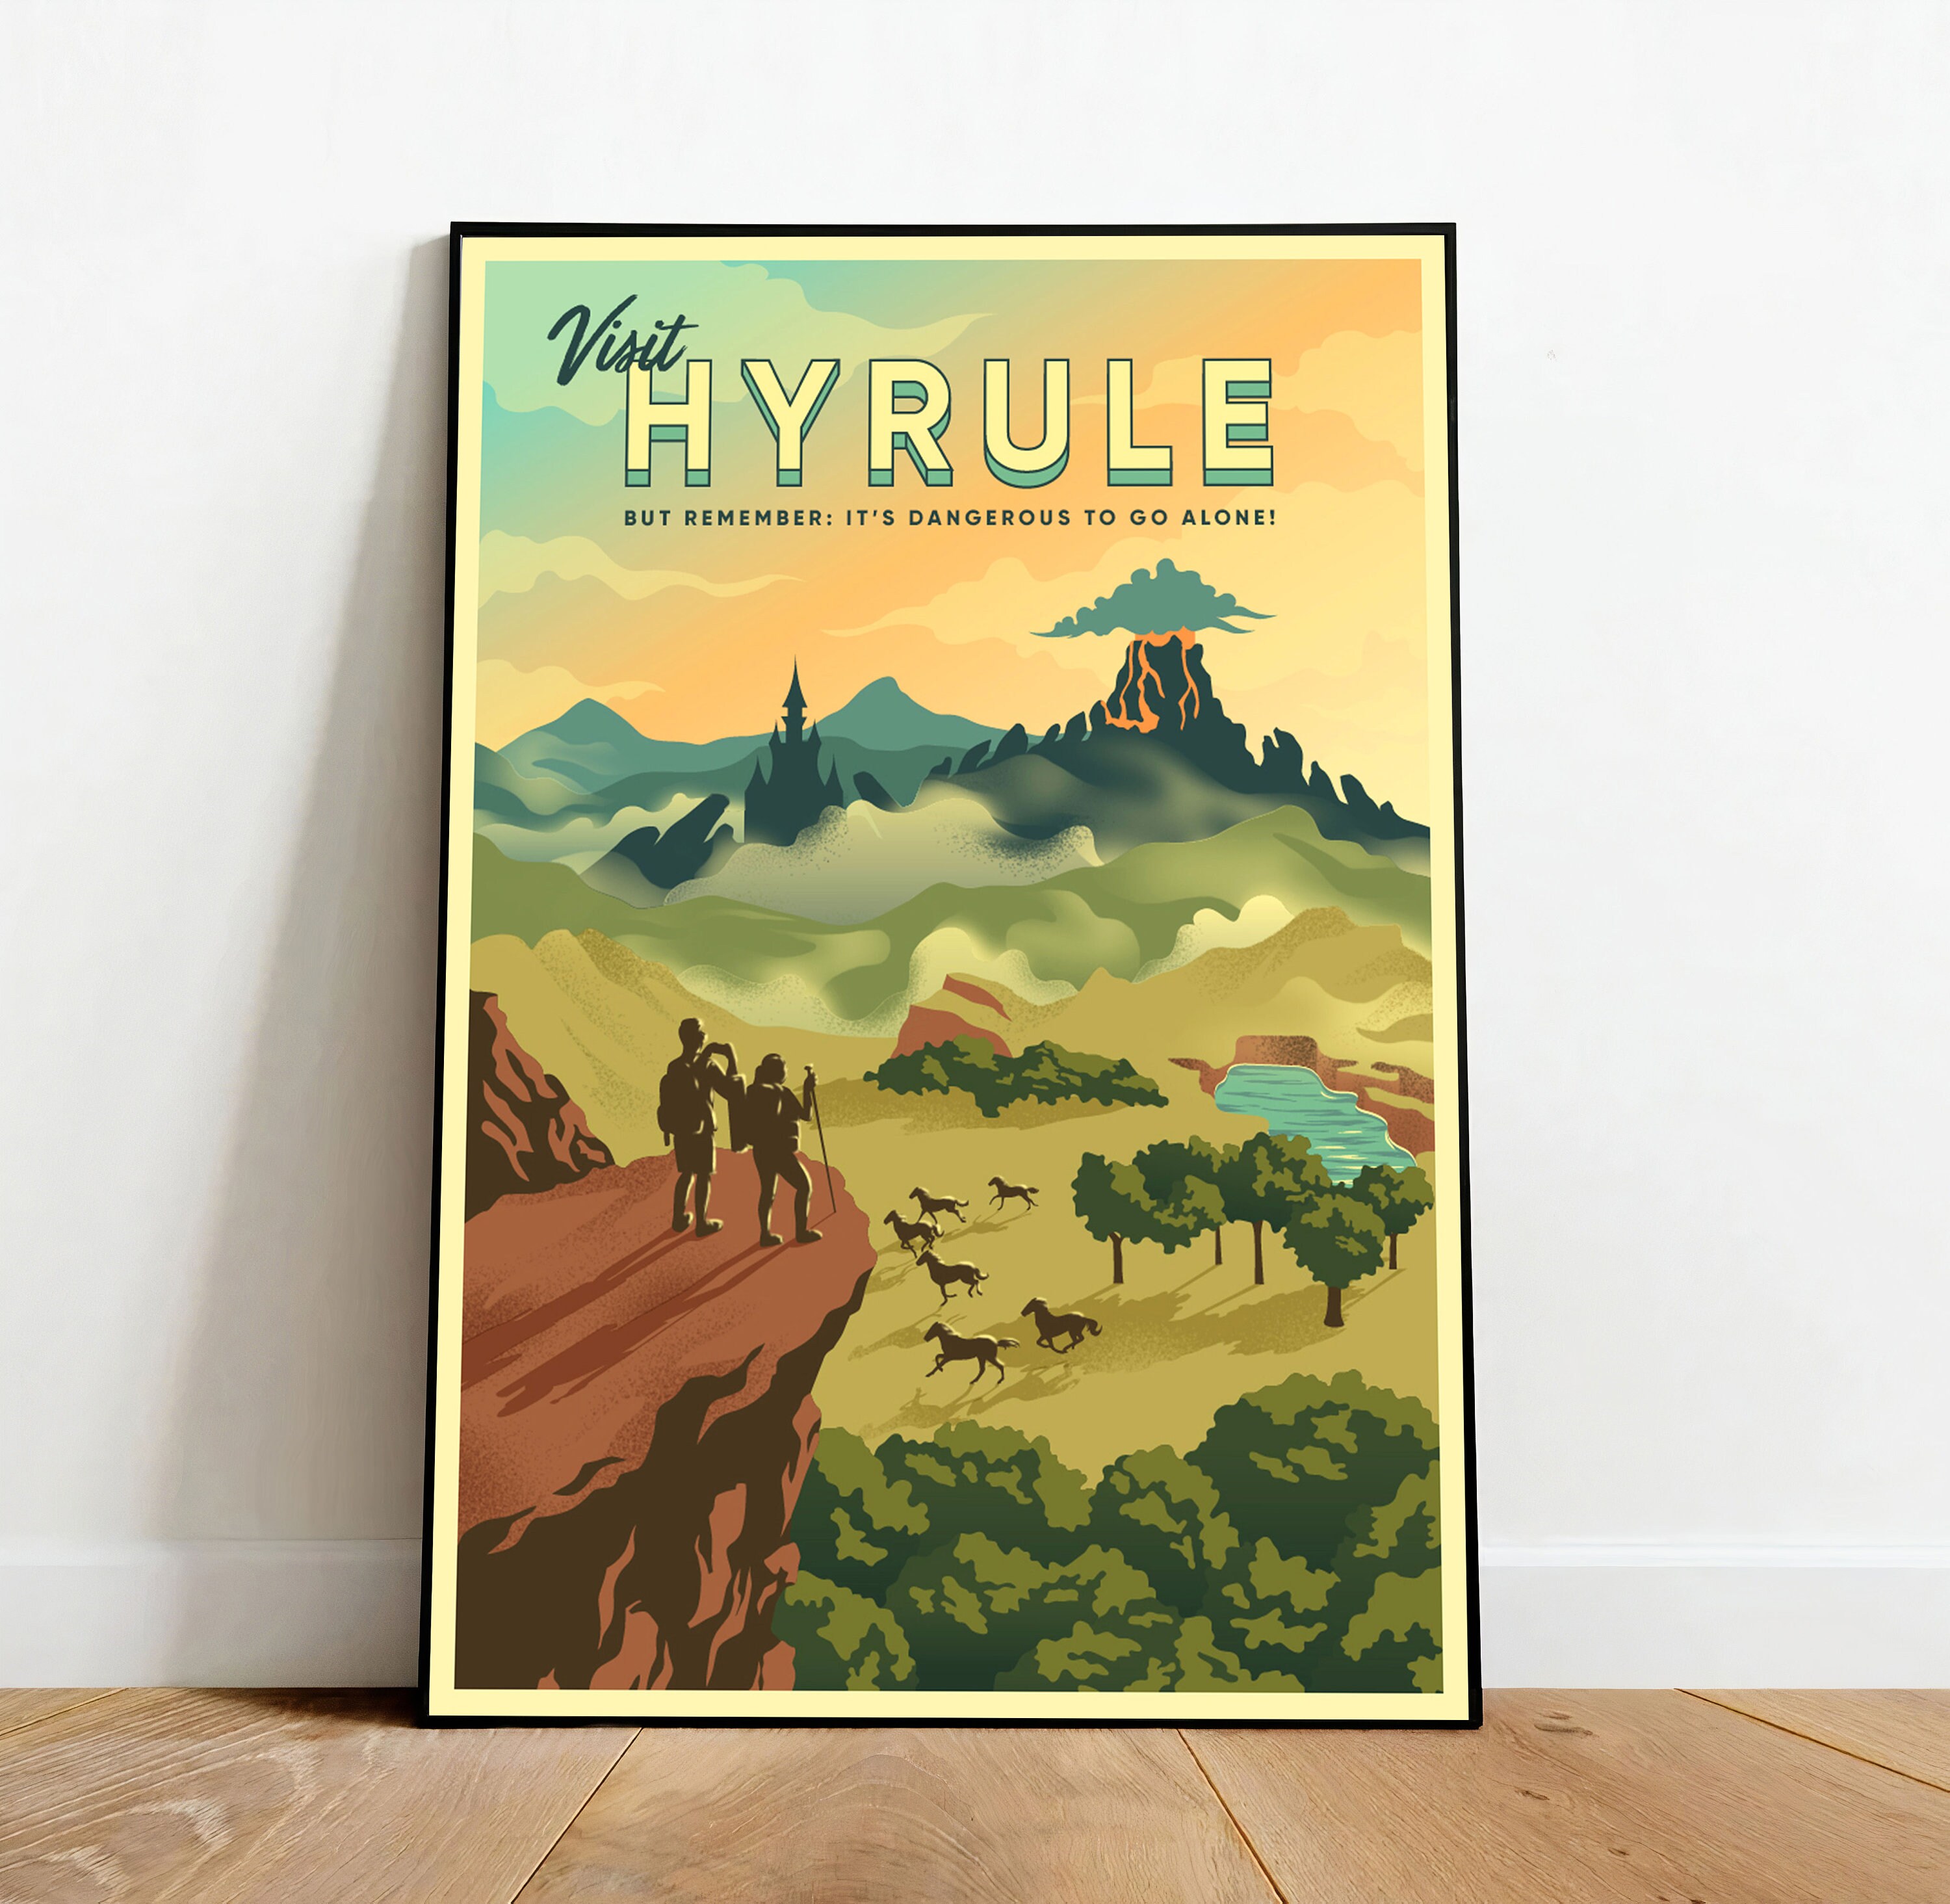 Poster Zelda Breath of the Wild - Hyrule Scene Landscape